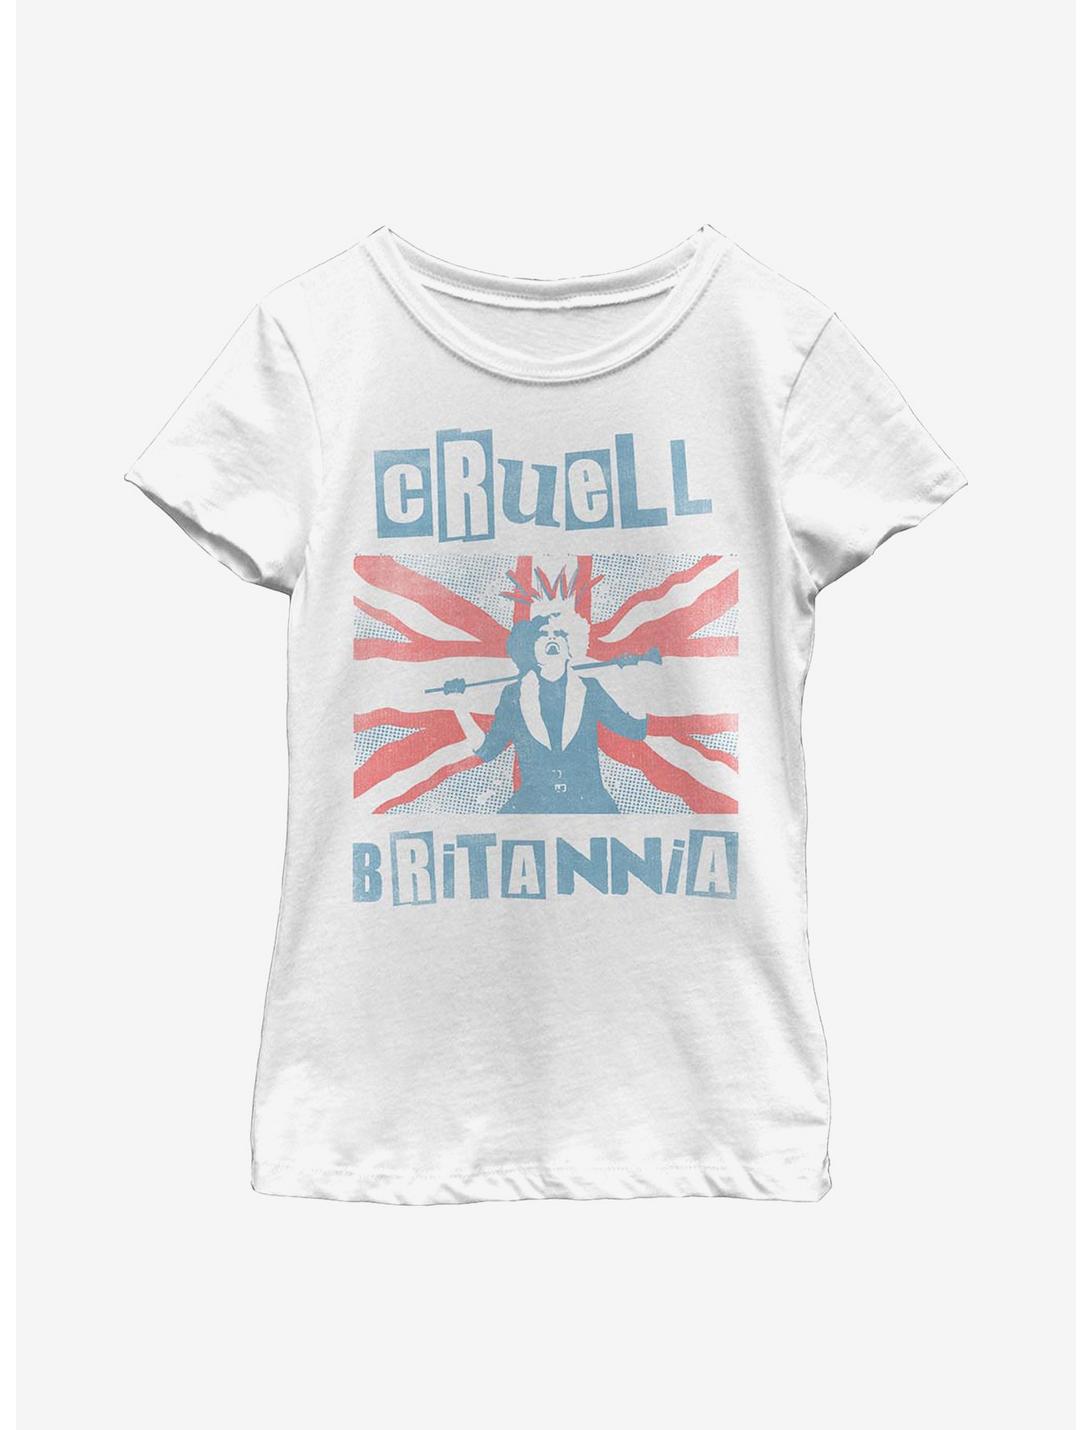 Disney Cruella Britannia Youth Girls T-Shirt, WHITE, hi-res